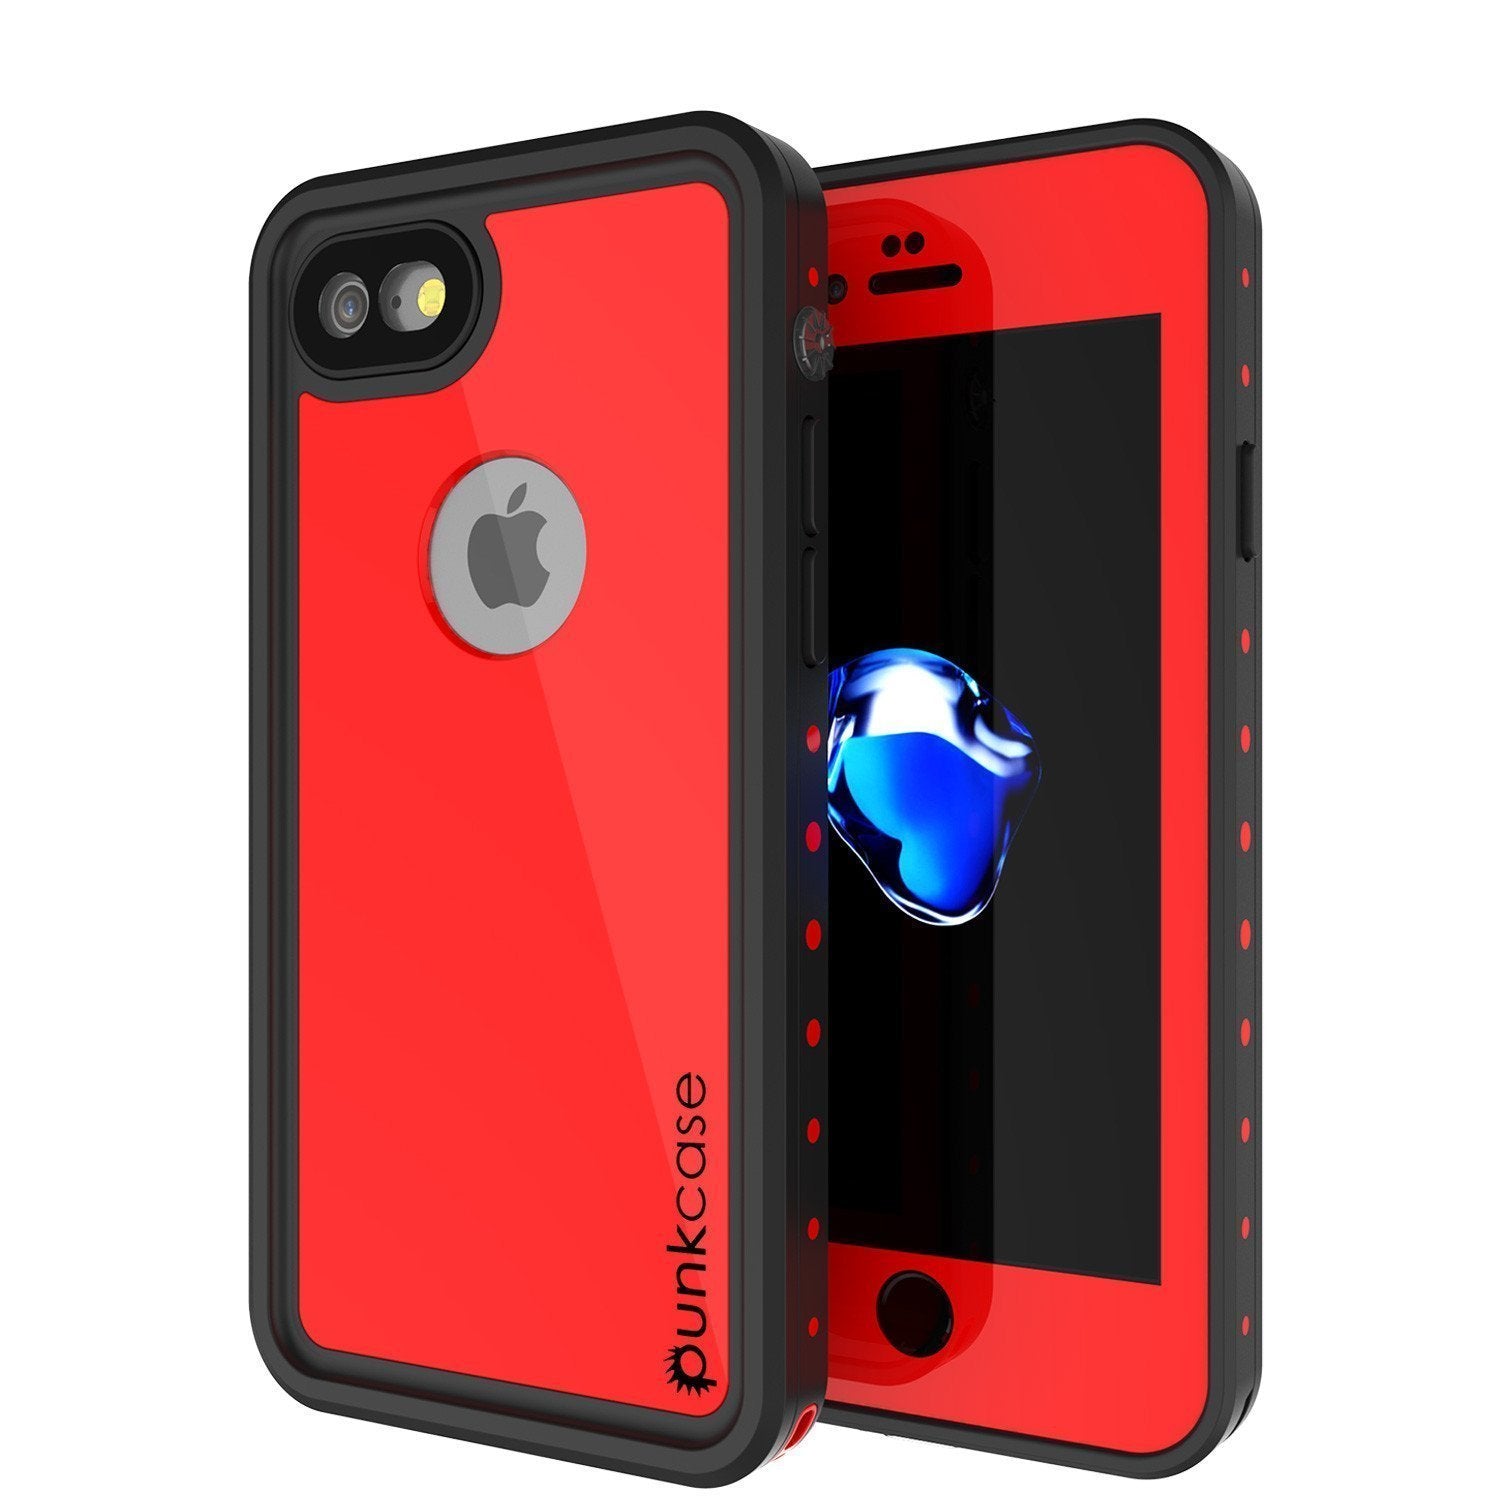 iPhone 8 Waterproof Case, PunkCase® StudStar Red Case for Apple